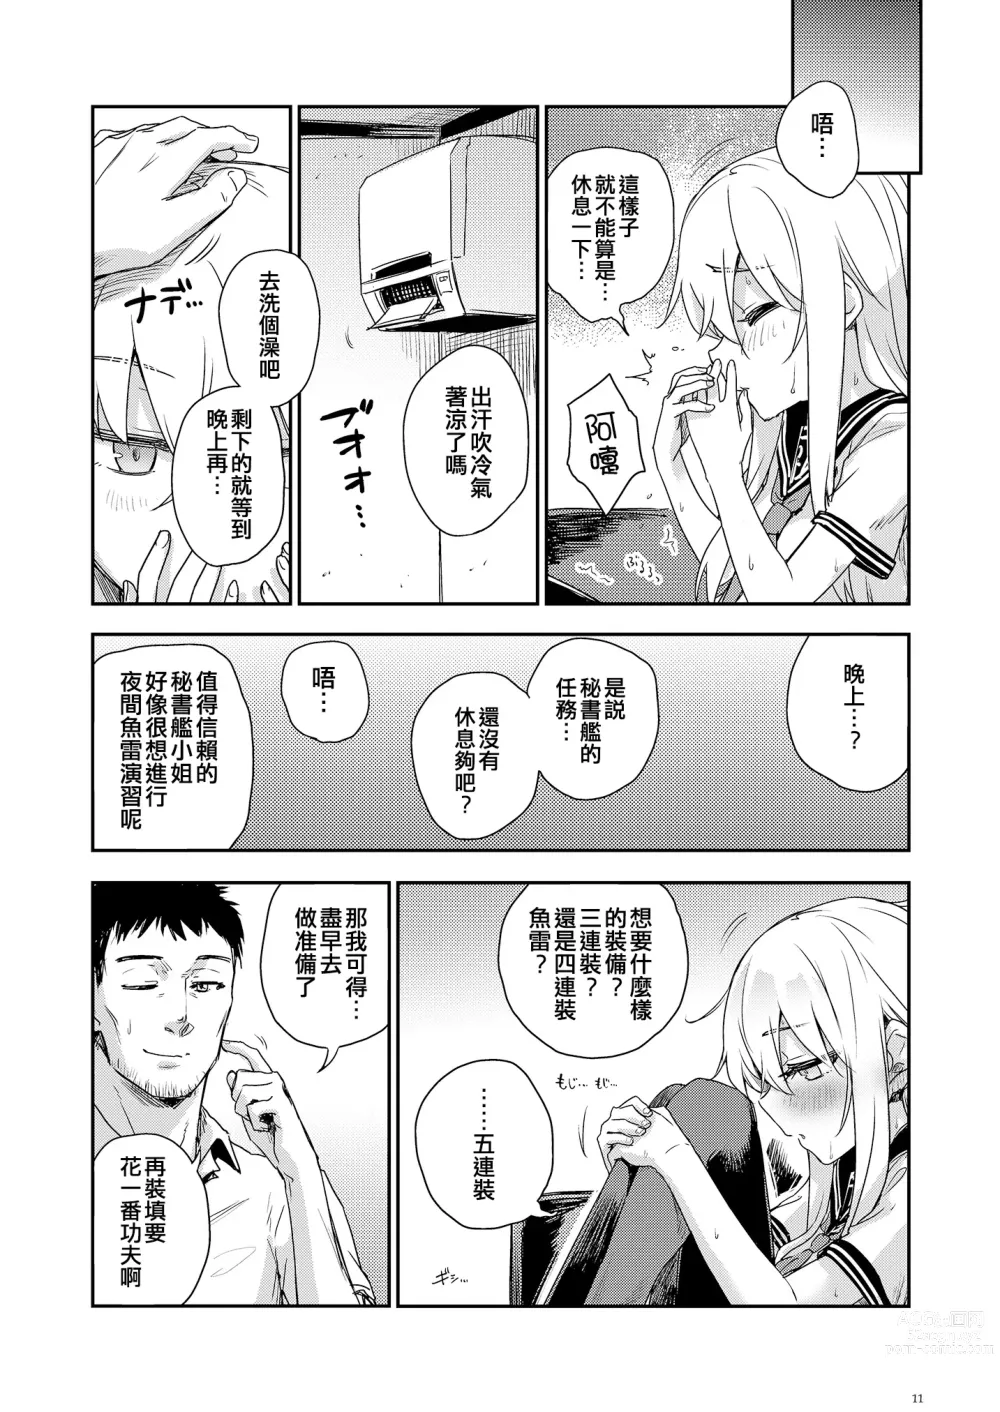 Page 11 of doujinshi Hishokan to Nettaiya